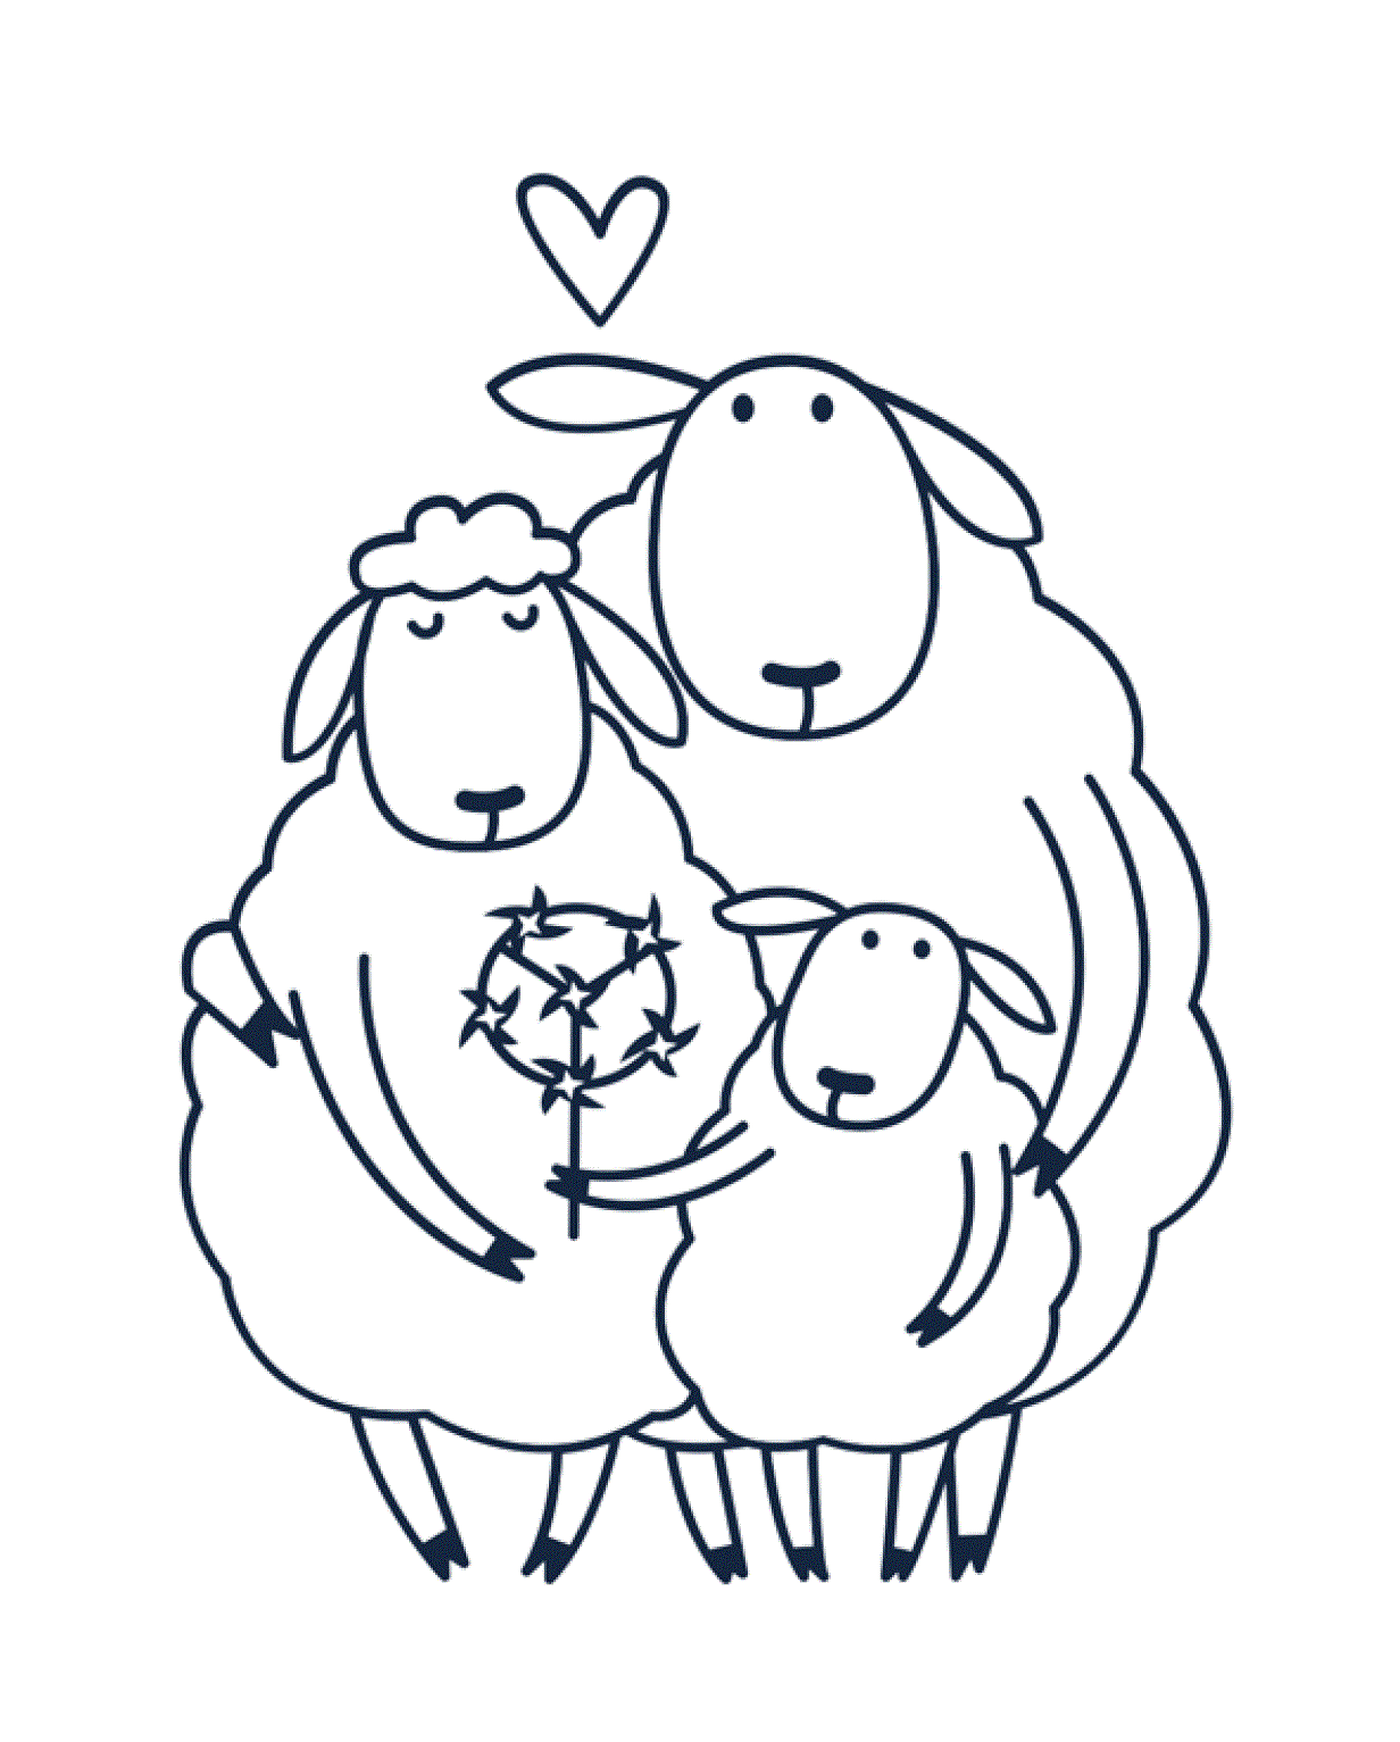  группа овец вместе 